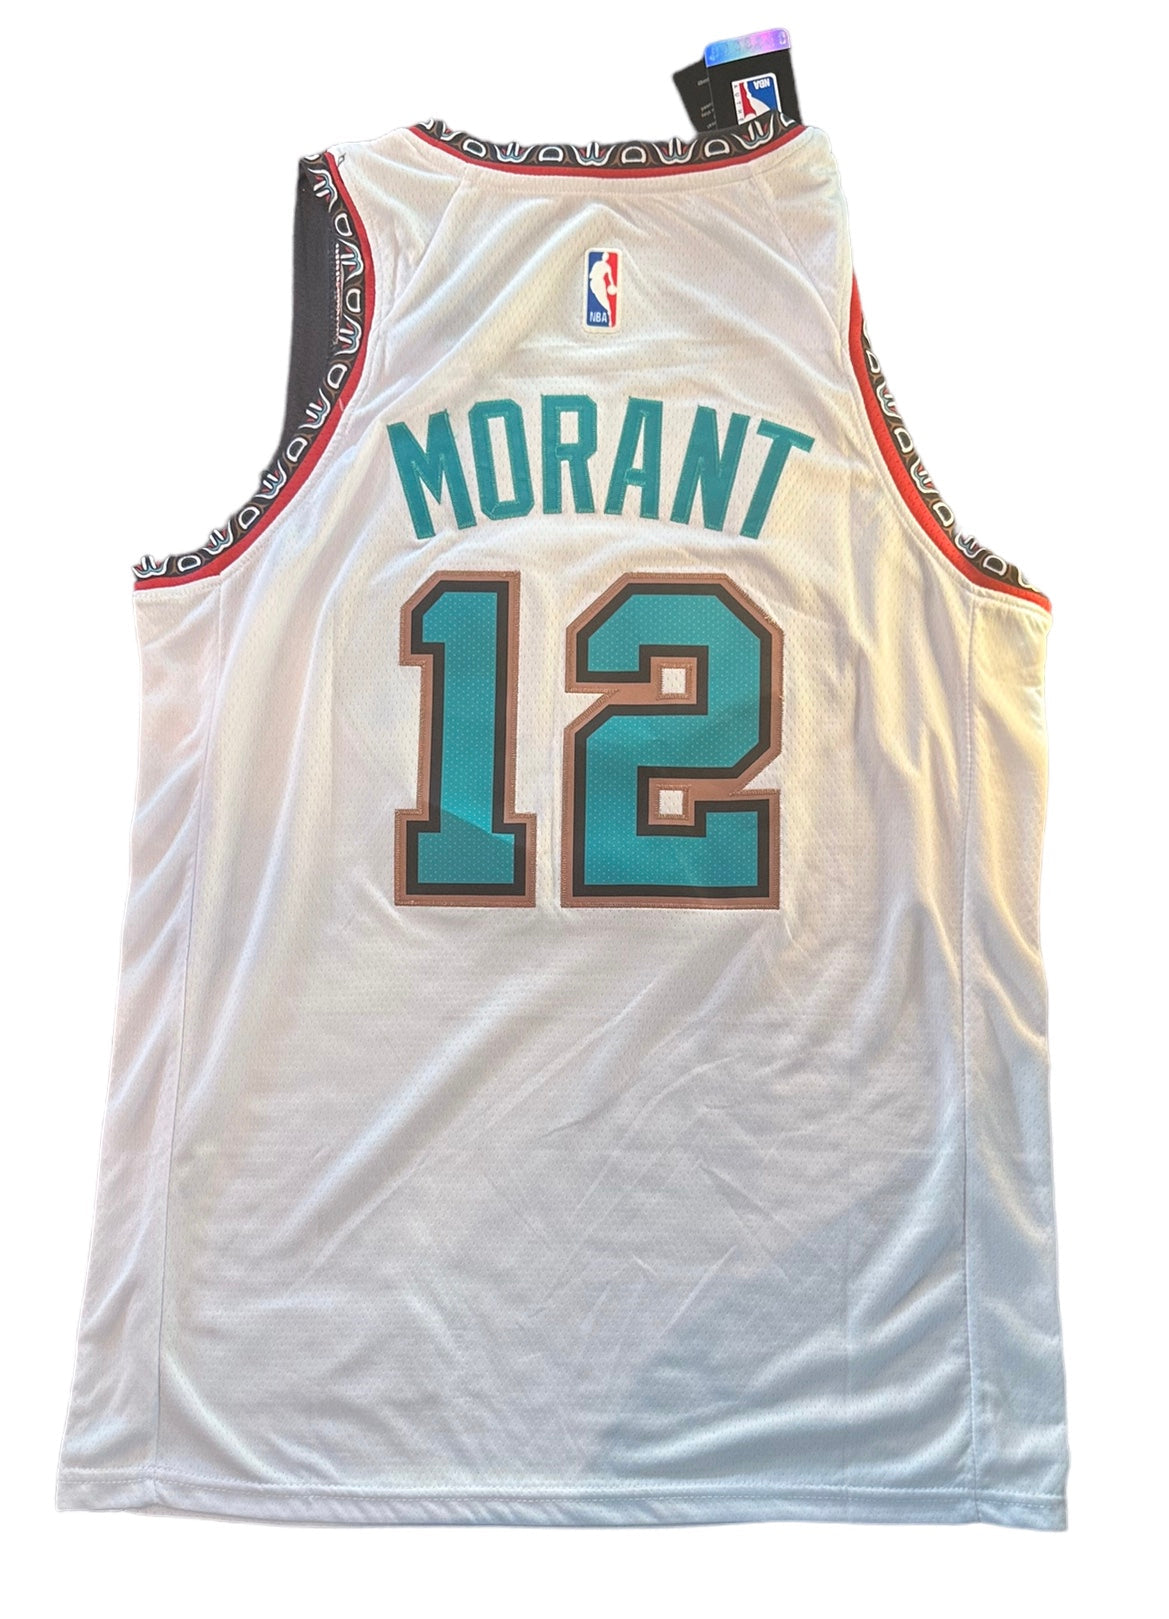 Ja Morant Jerseys, Morant Grizzlies Shirts, Ja Morant Basketball